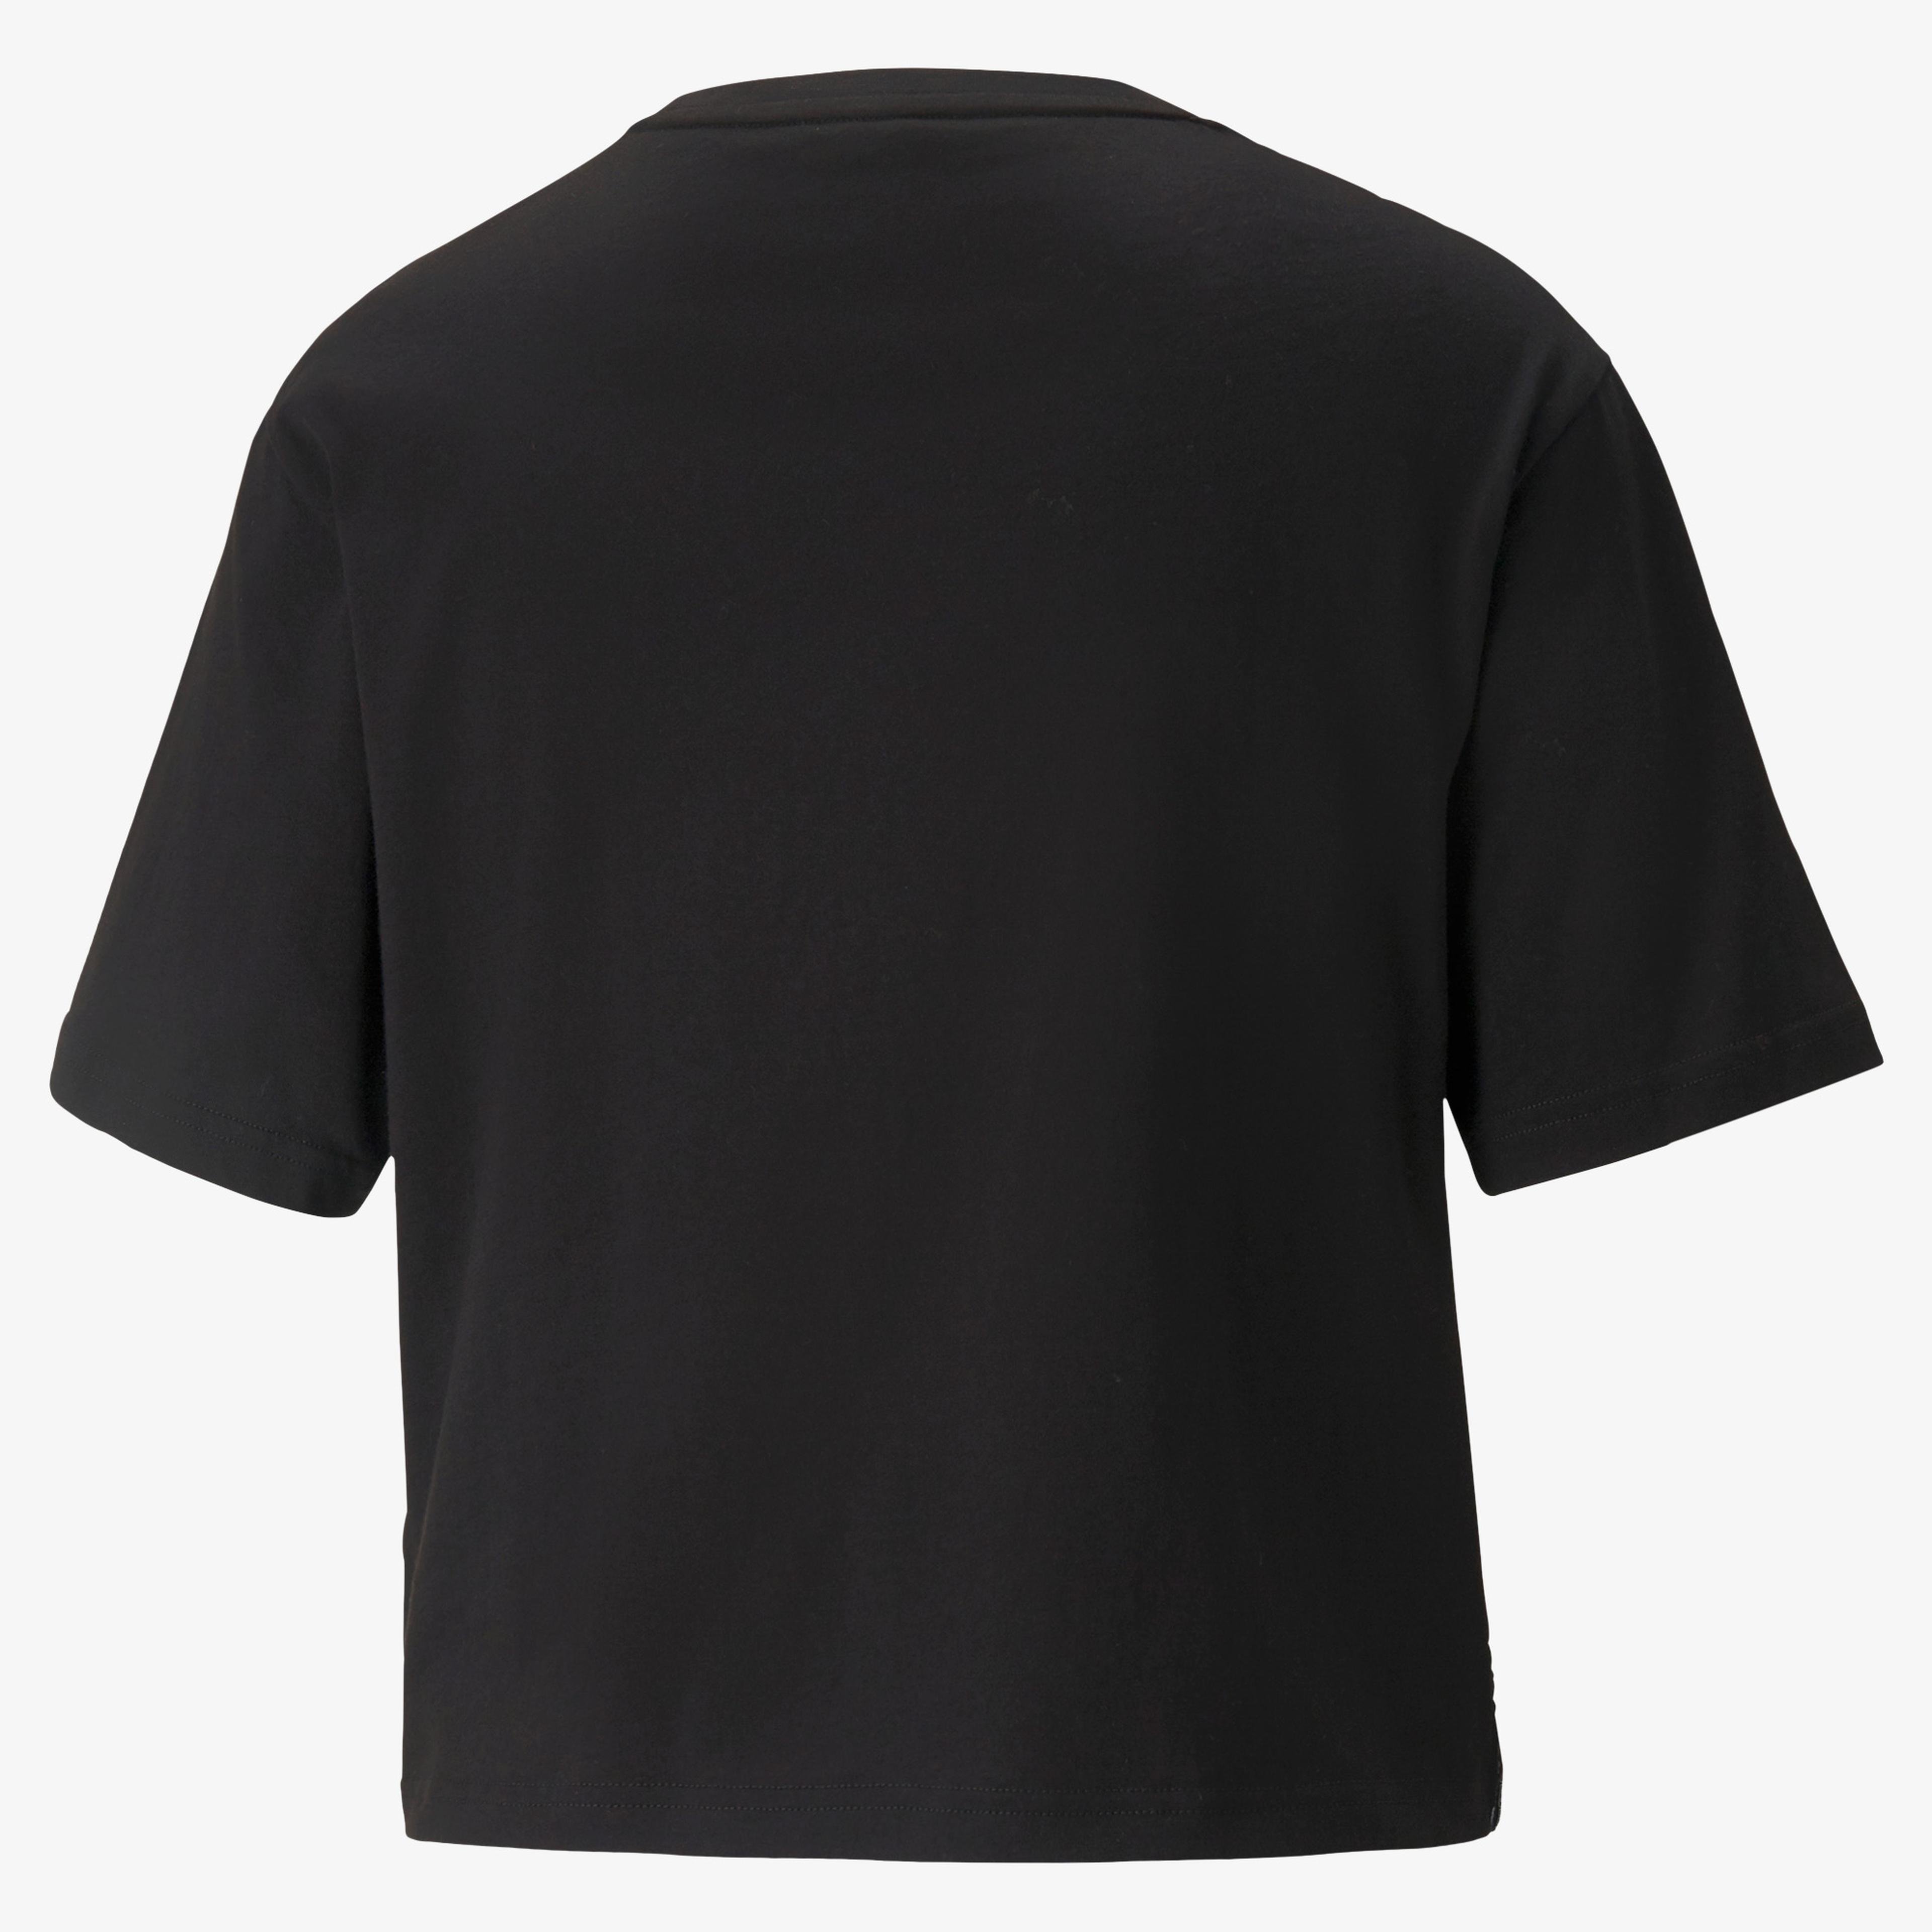 Puma Power Kadın Siyah T-Shirt